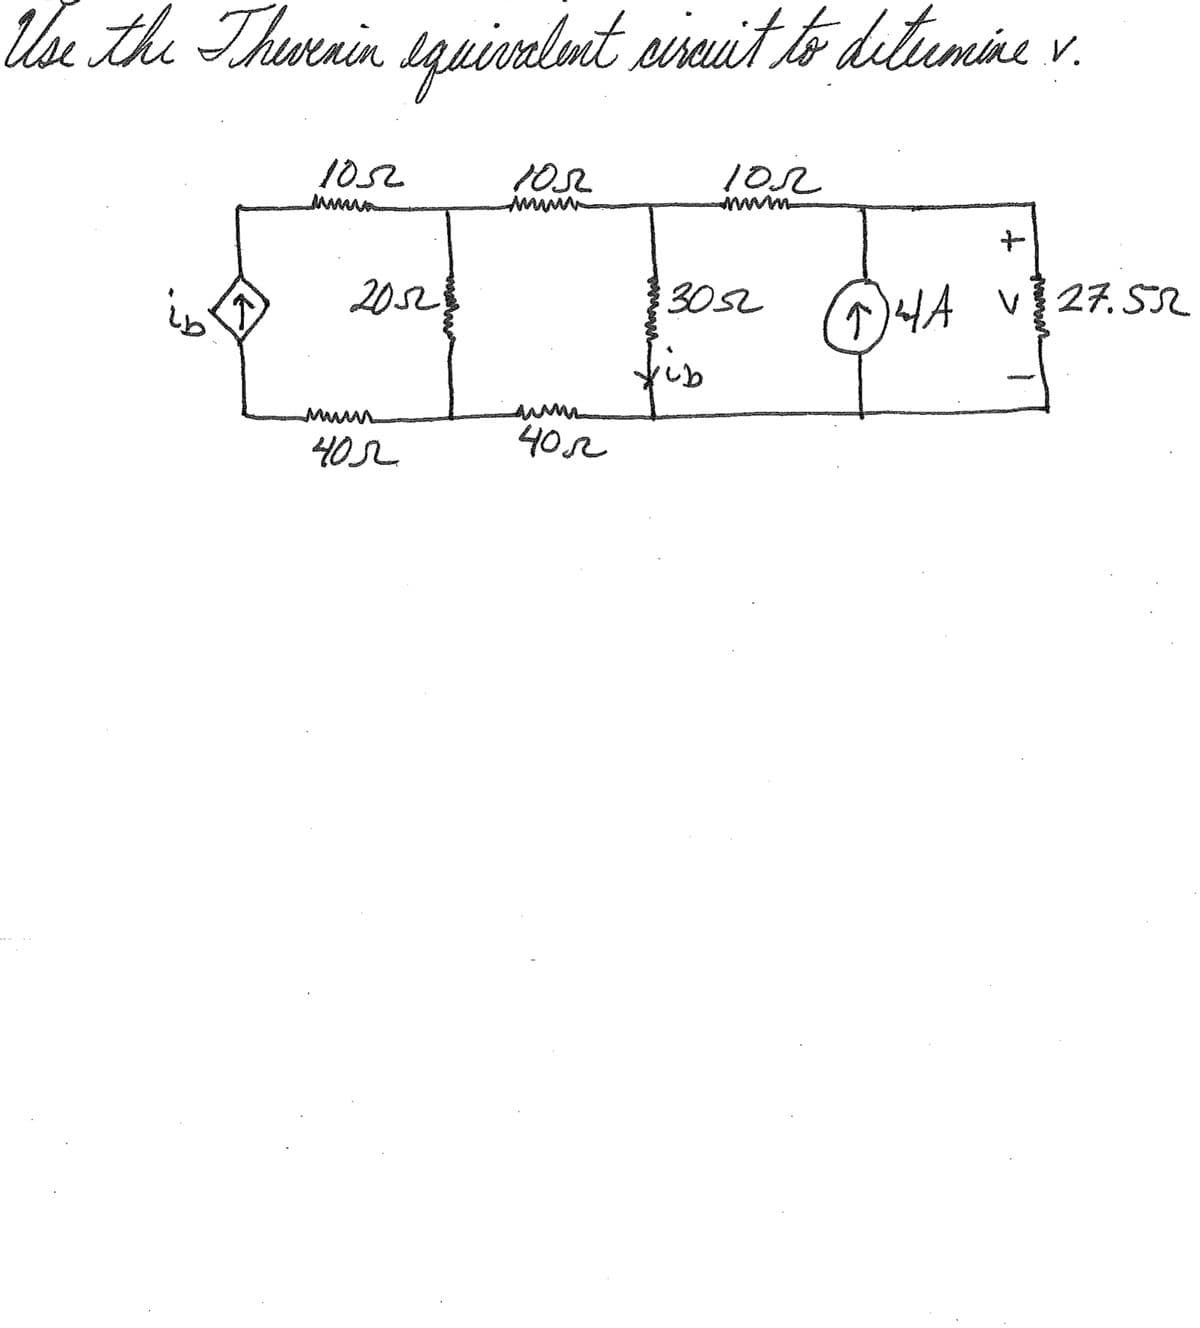 Use the Thevenin equivalent circuit to determine v.
is
1052
MM
2052
чол
1052
чол
10R
3052
fib
+
(14A V127.552